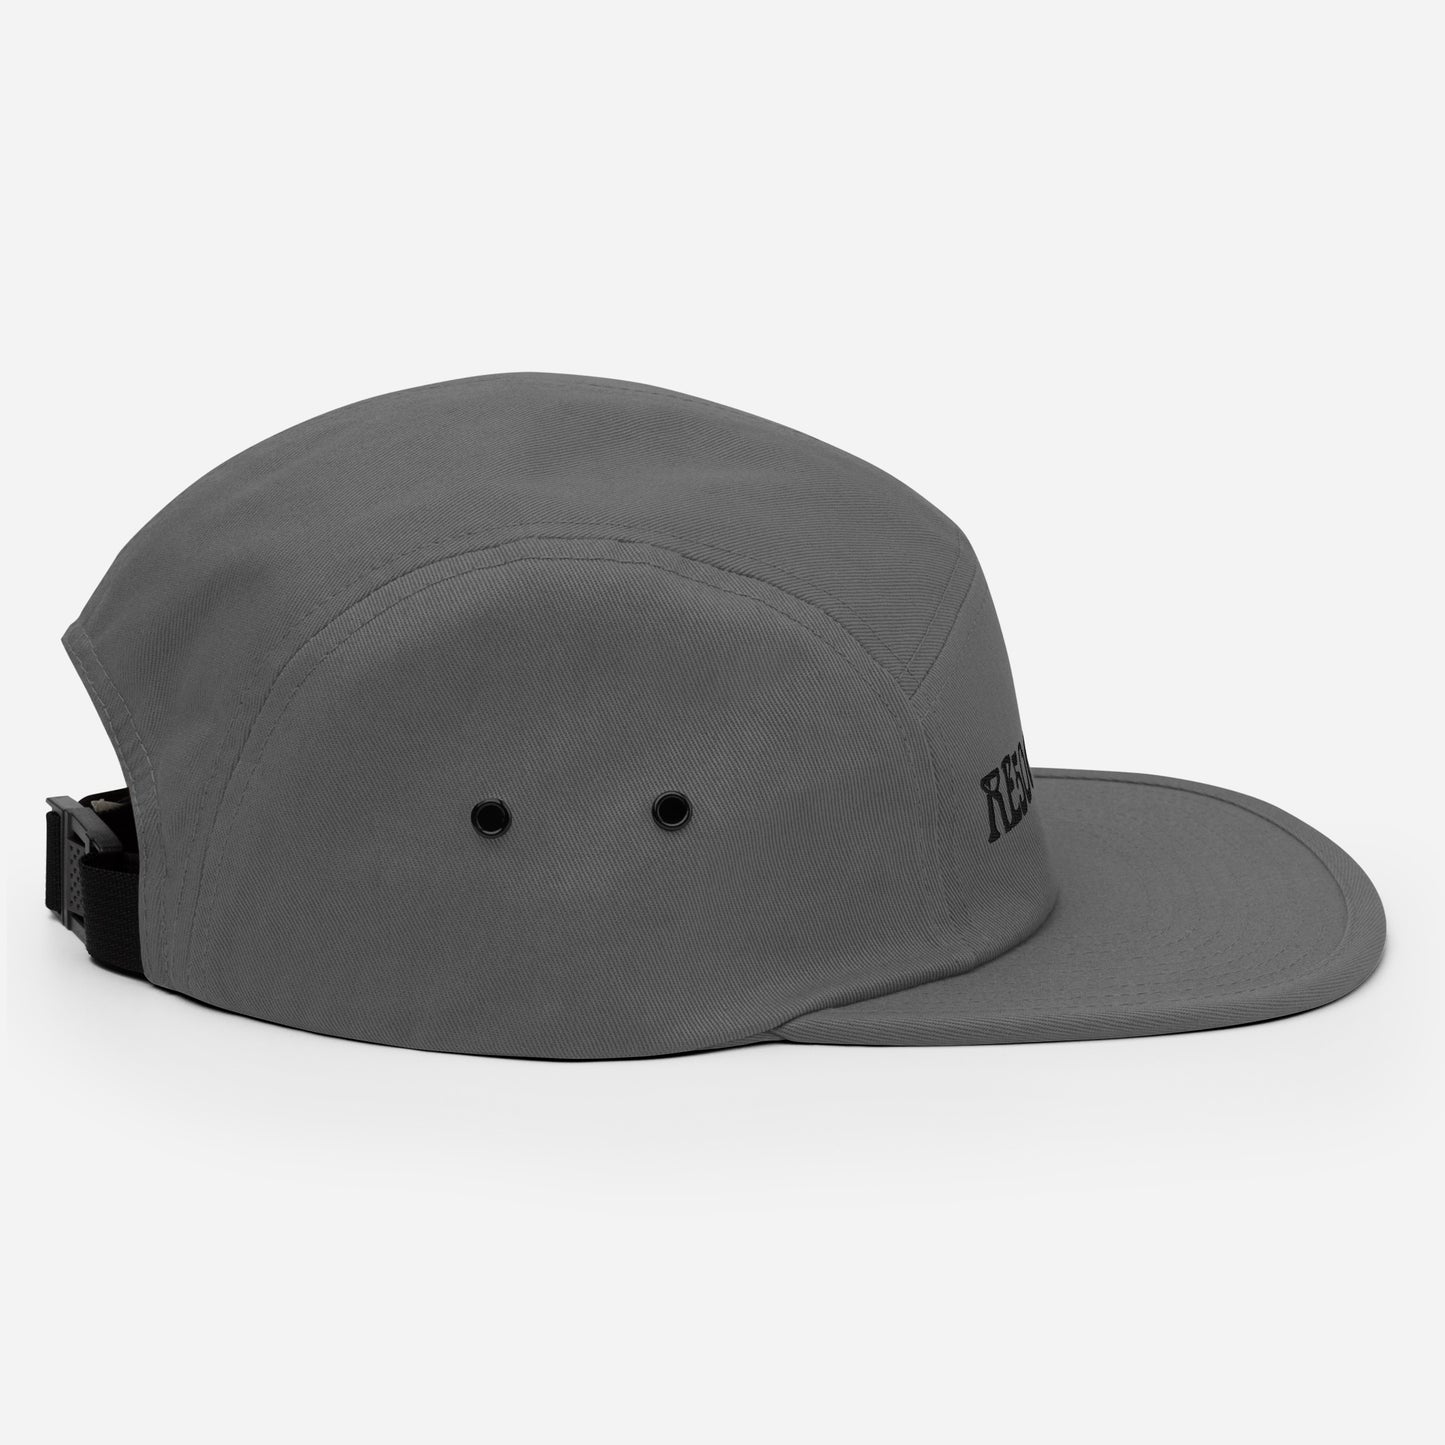 3.5 RE5004AL HAT